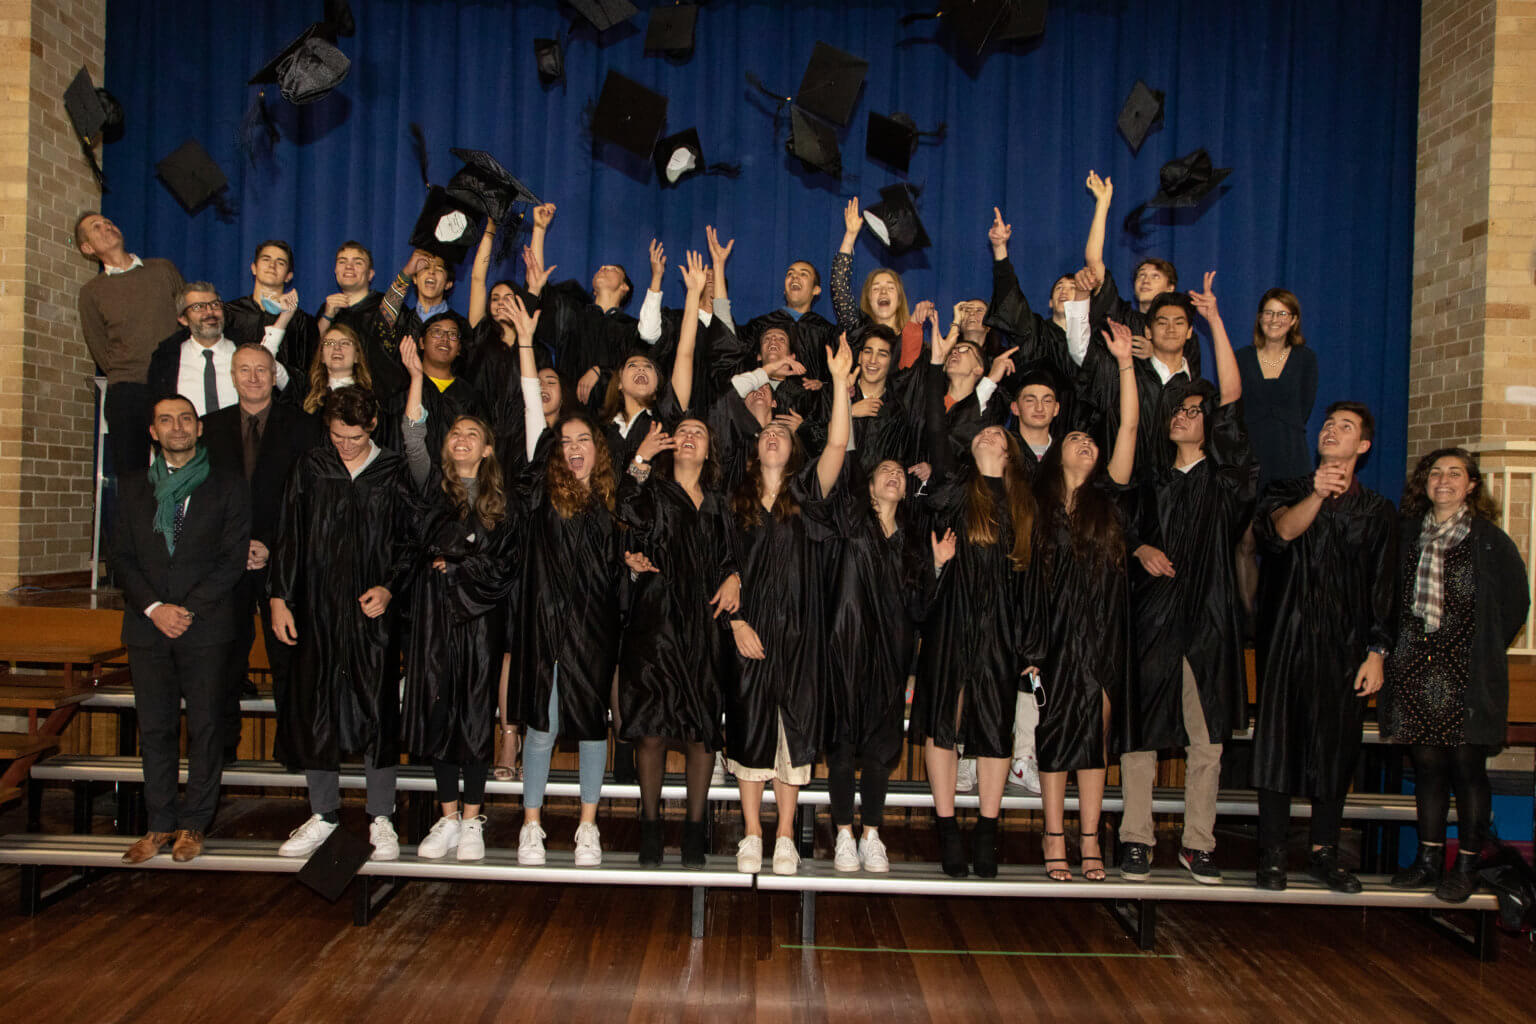 Graduation ceremony at the international french school of sydney